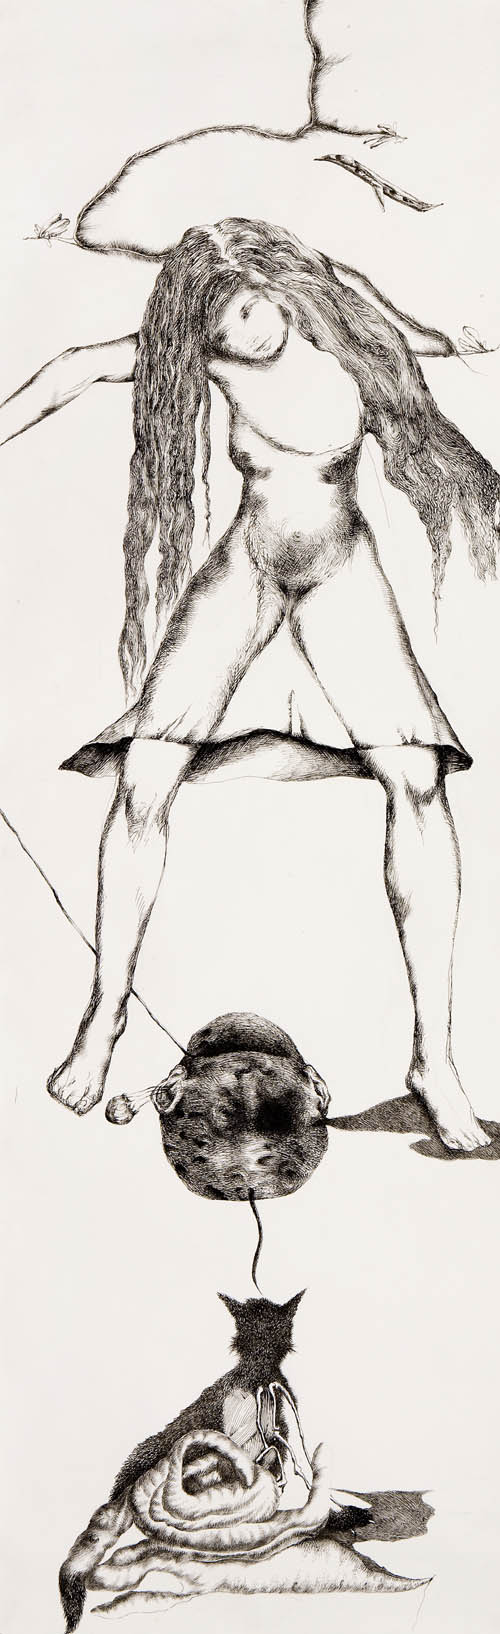 Nino Japaridze - La robe et la chatte (The Dress and the Cat) - 2008 ink on paper